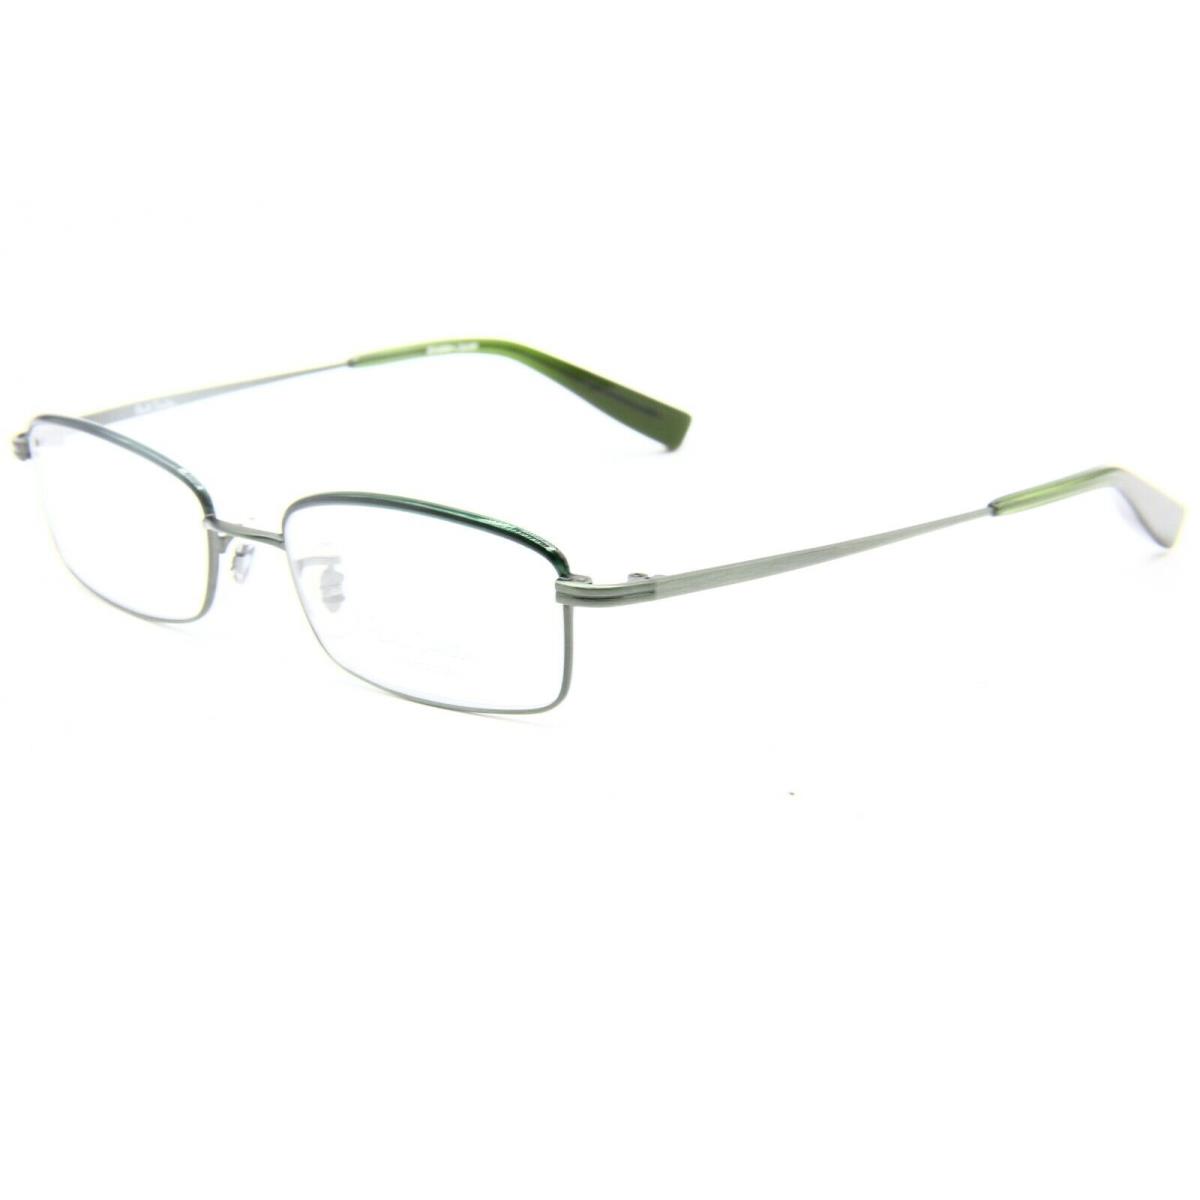 Paul Smith PS-1010 Pn/gn Green Eyeglasses Frame RX 50-18